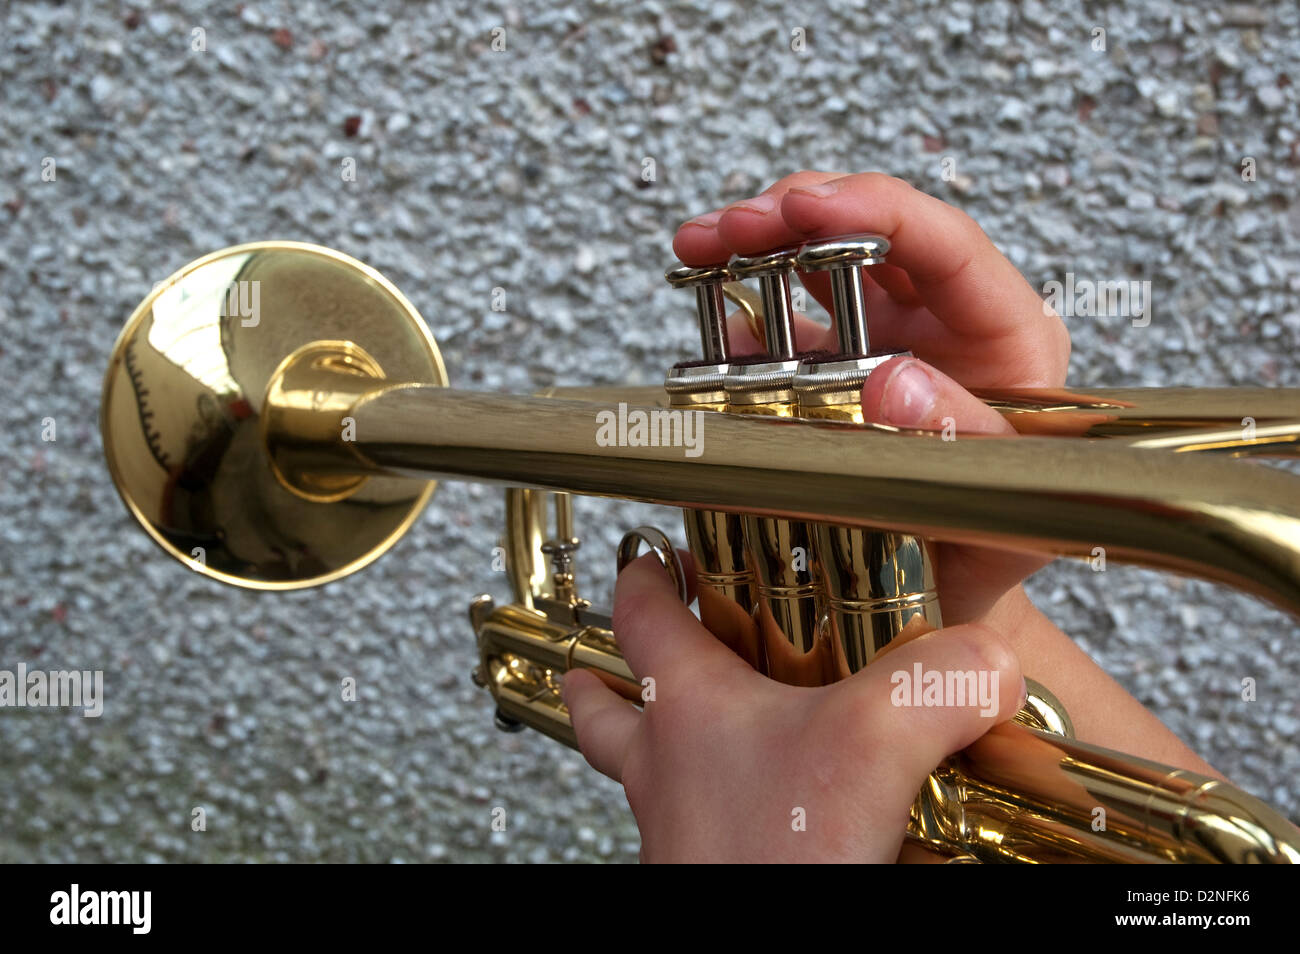 A teenage boy playing a trumpet Stock Photo - Alamy